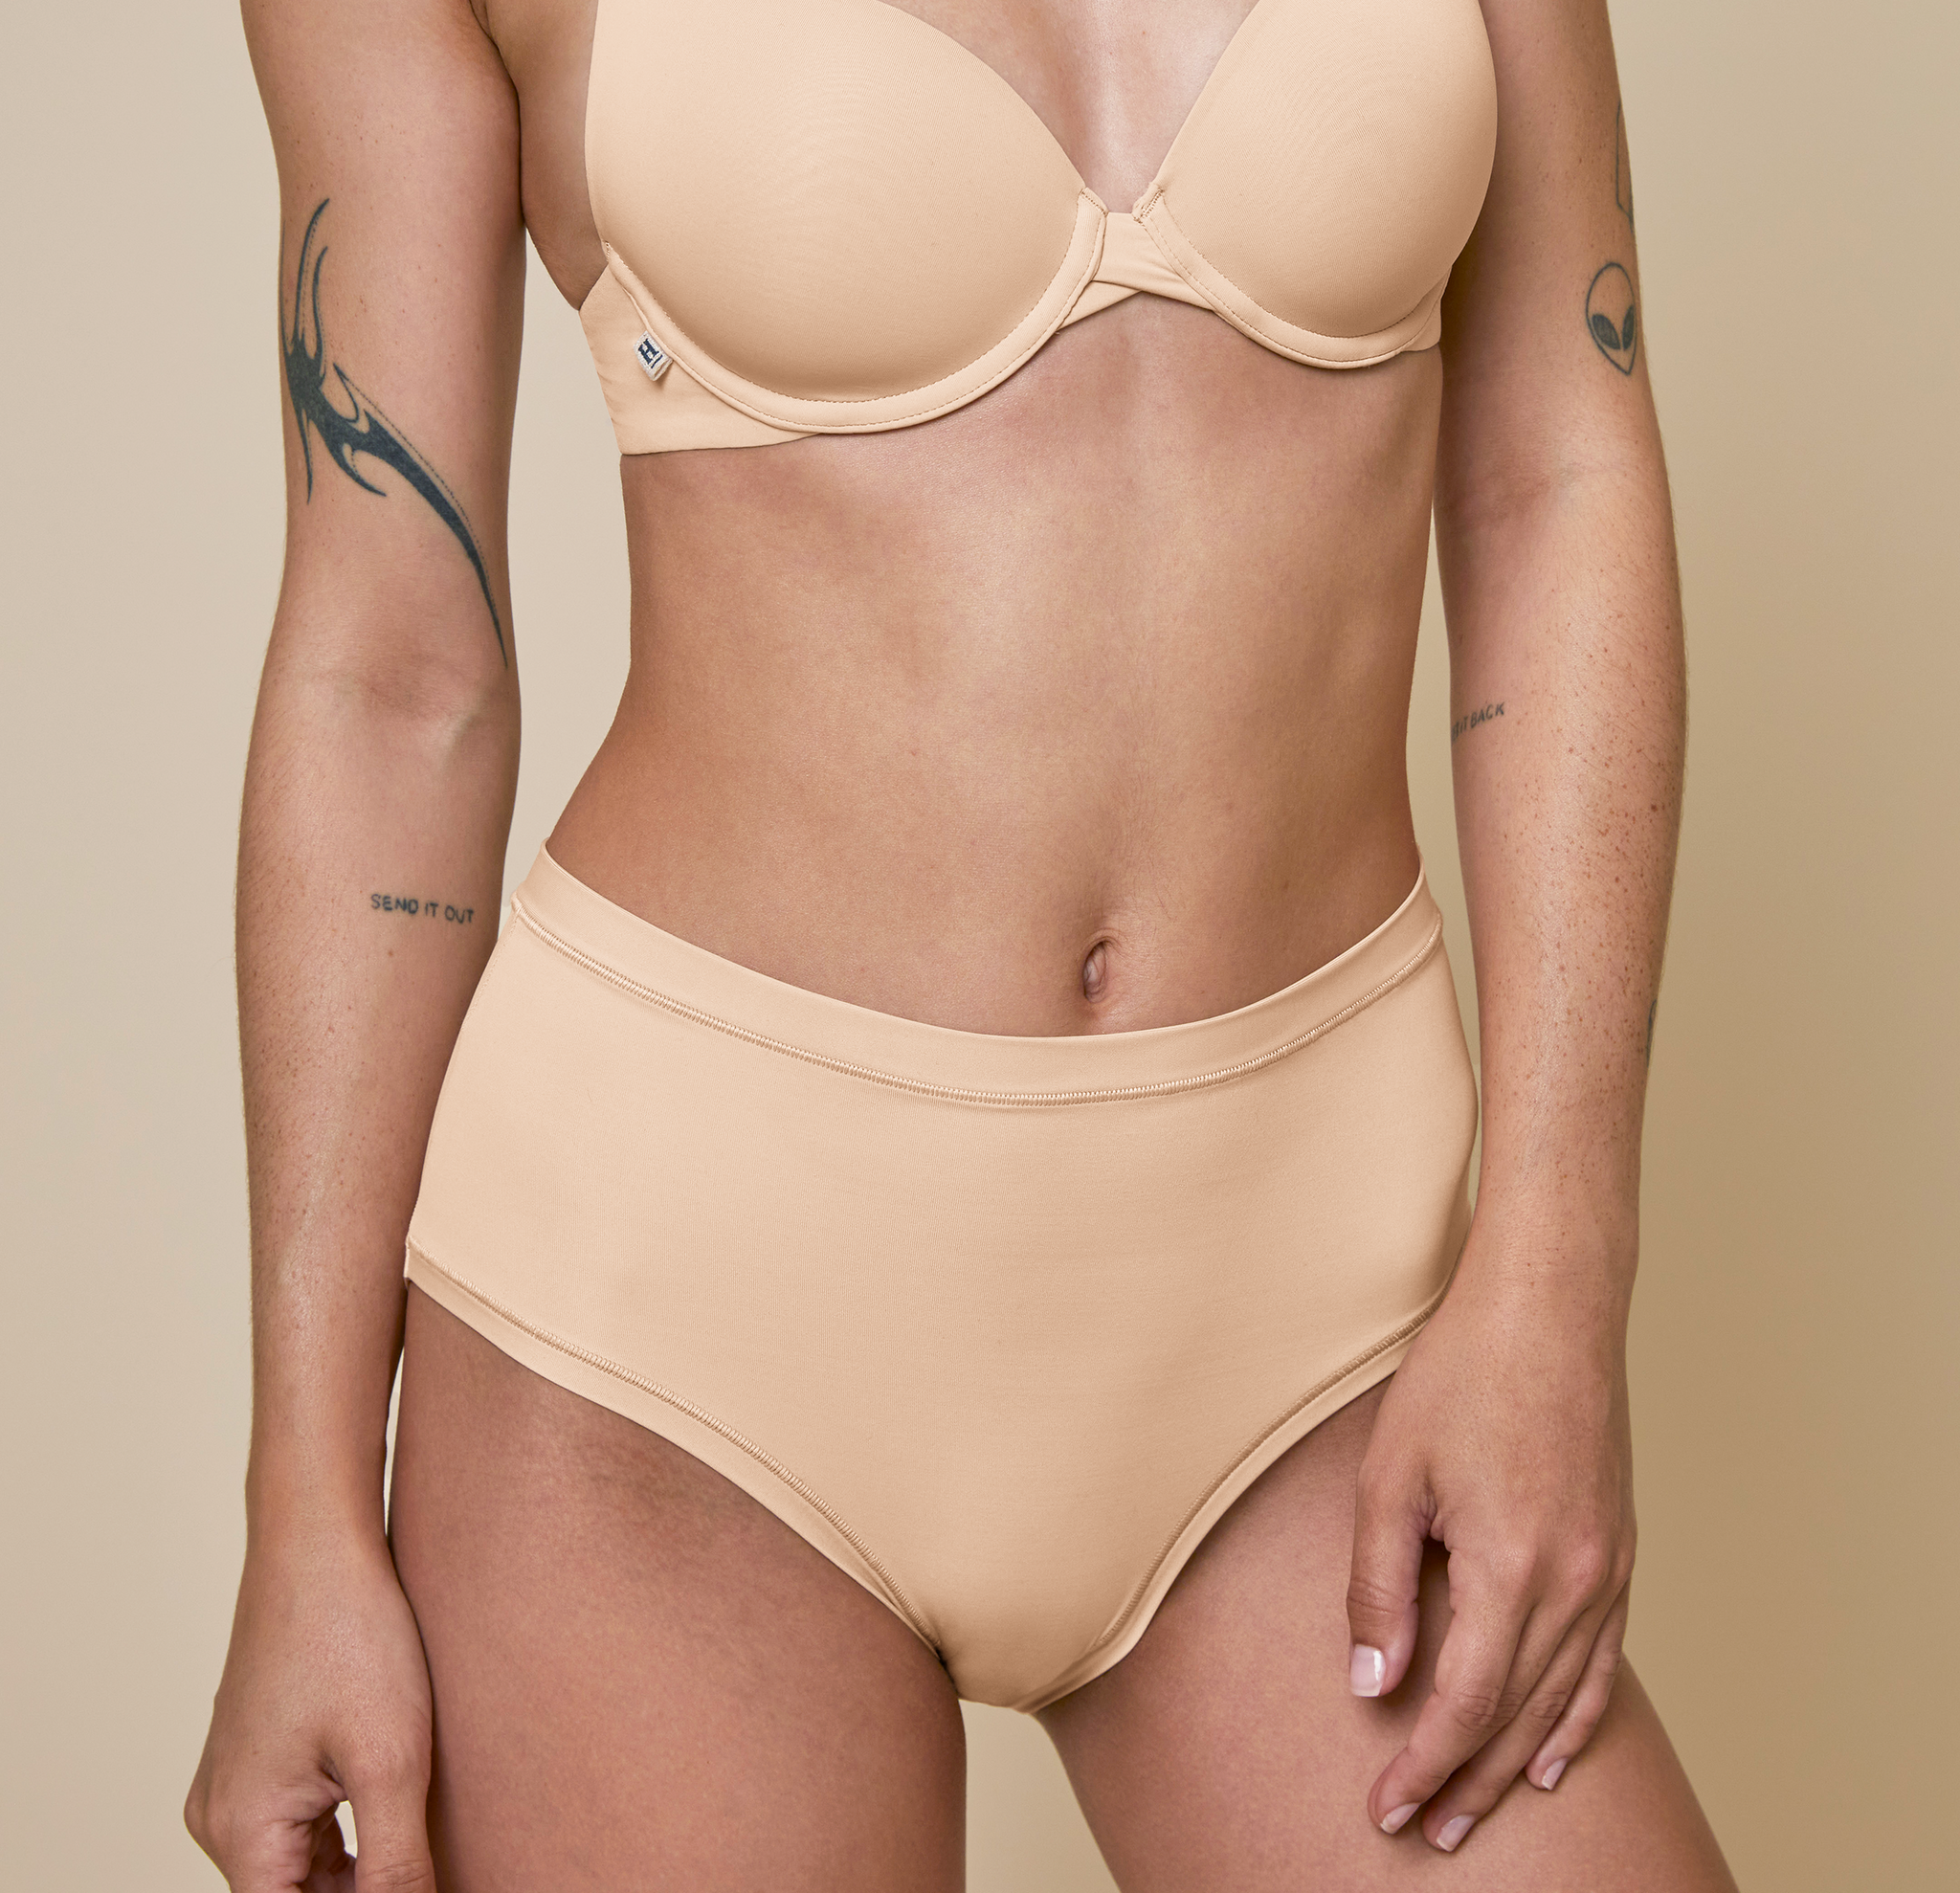 Harper Wilde Bikini Panties for Women